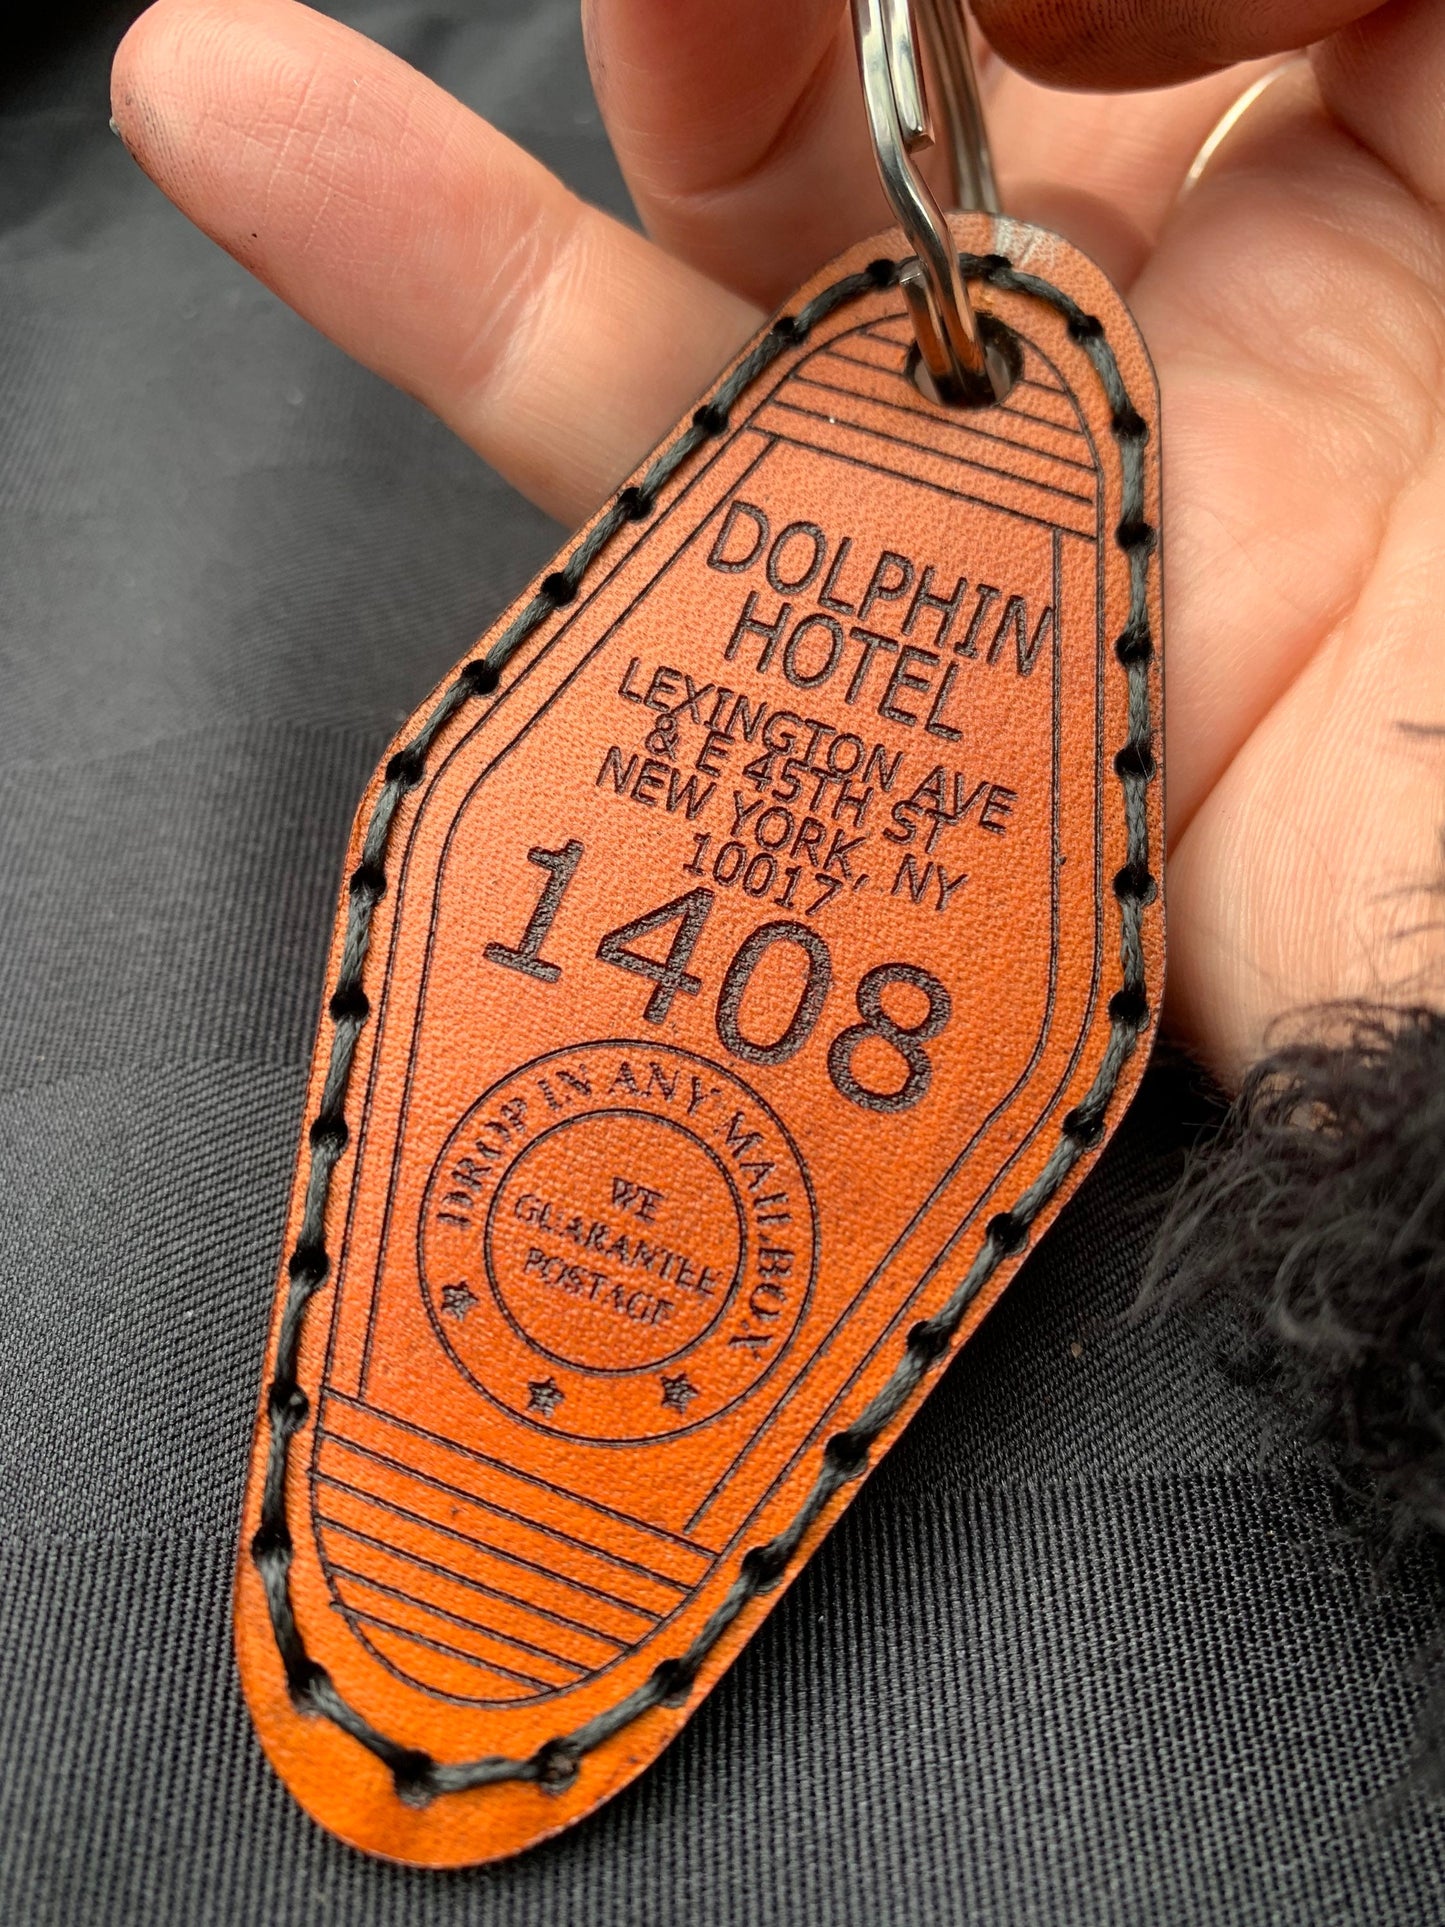 1408 Dolphin Hotel Retro Key Chain